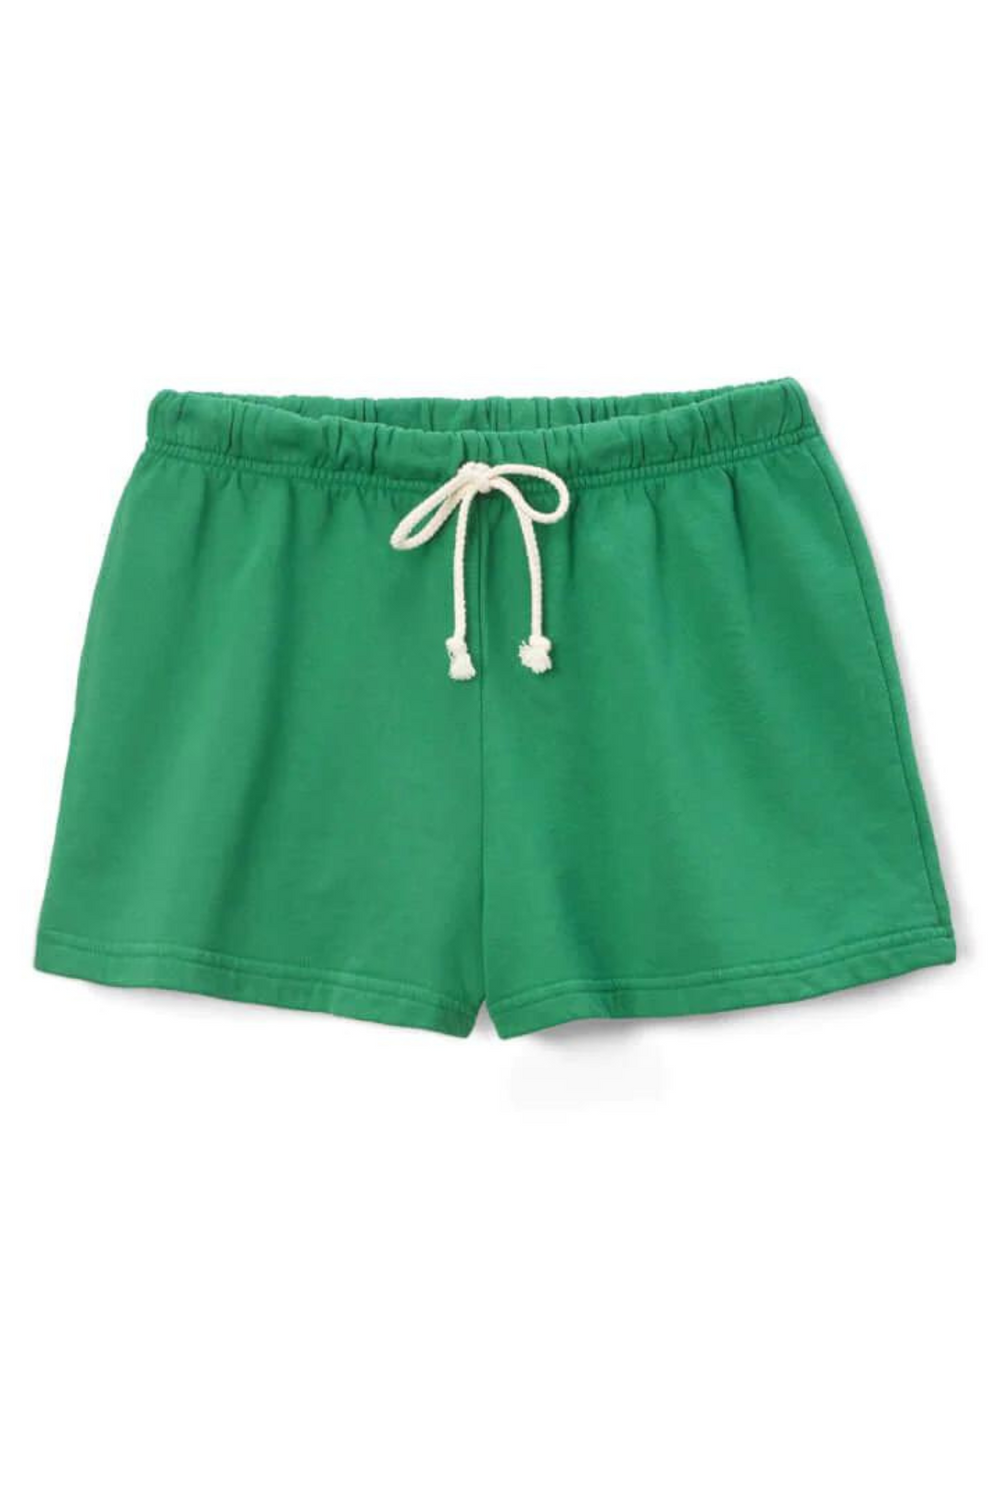 Perfect White Tee Aruba Shorts in Green